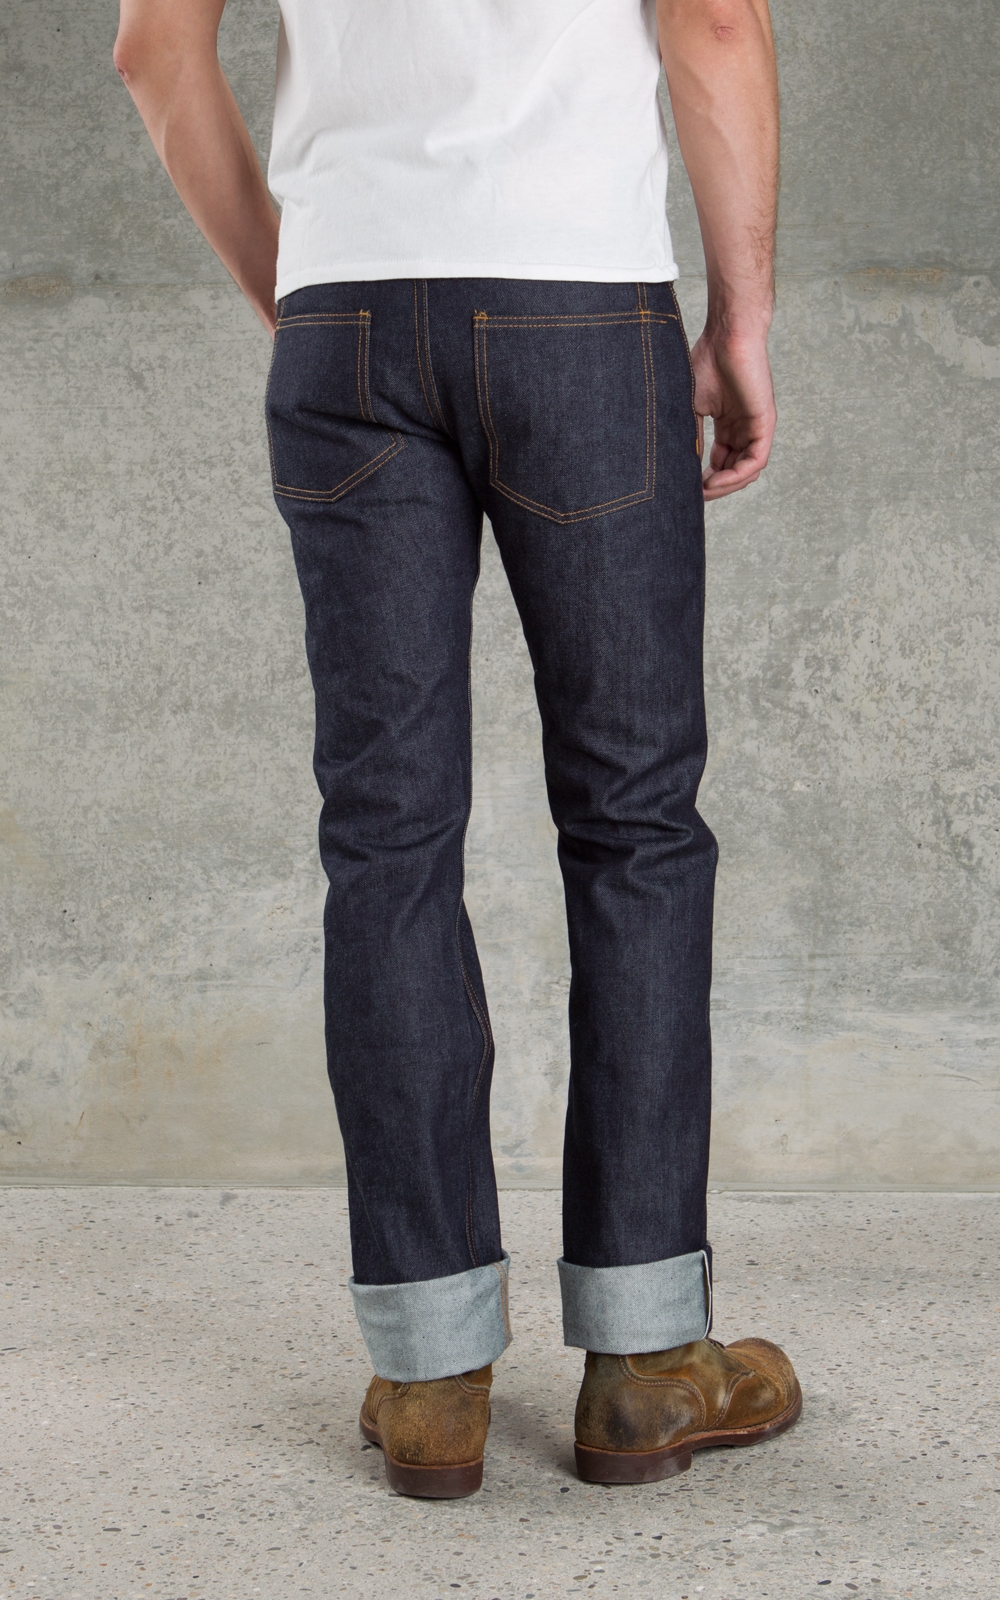 Cari Jeans: 3sixteen SL-100x Slim Straight Selvedge